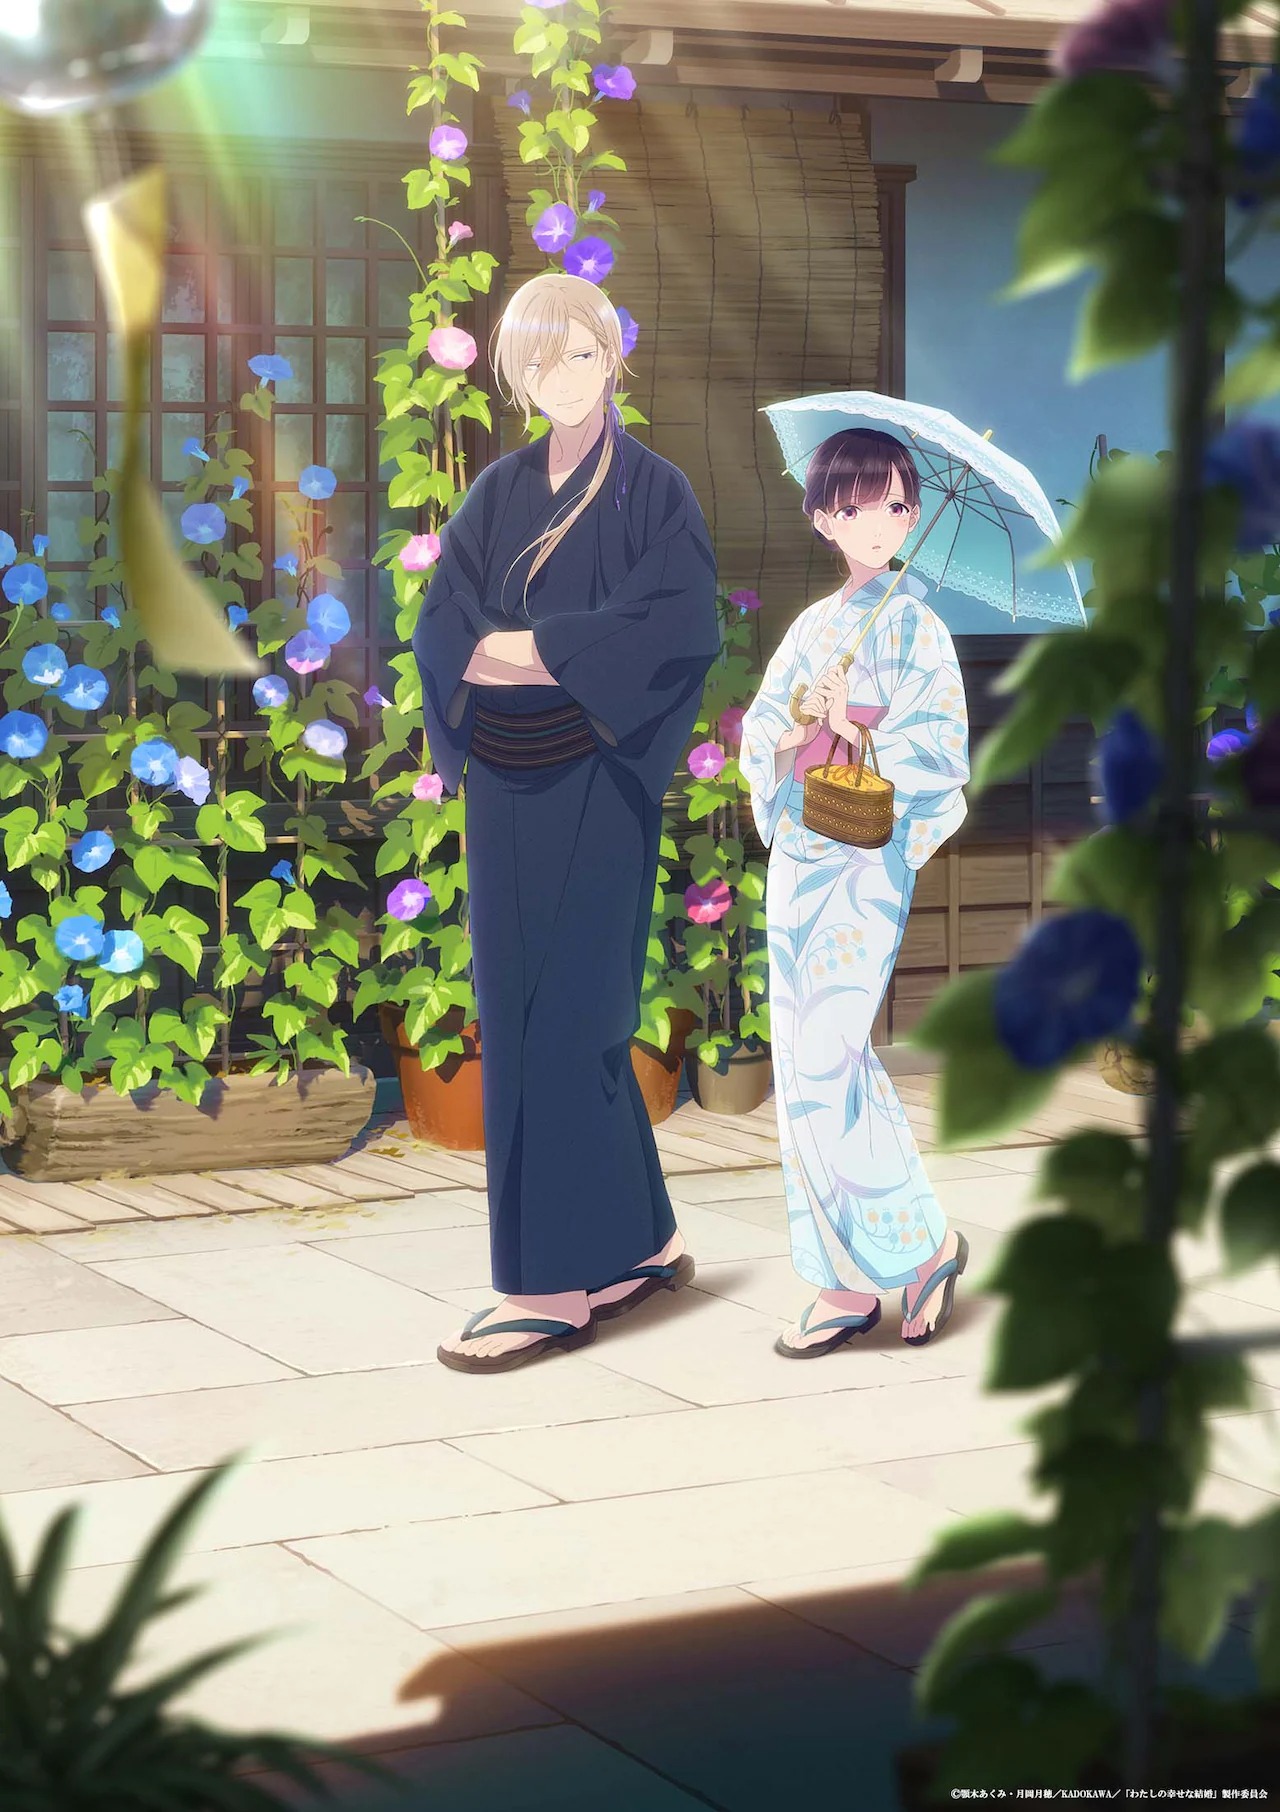 Crunchyroll - My Happy Marriage Anime Gets Sweet Summertime Visual